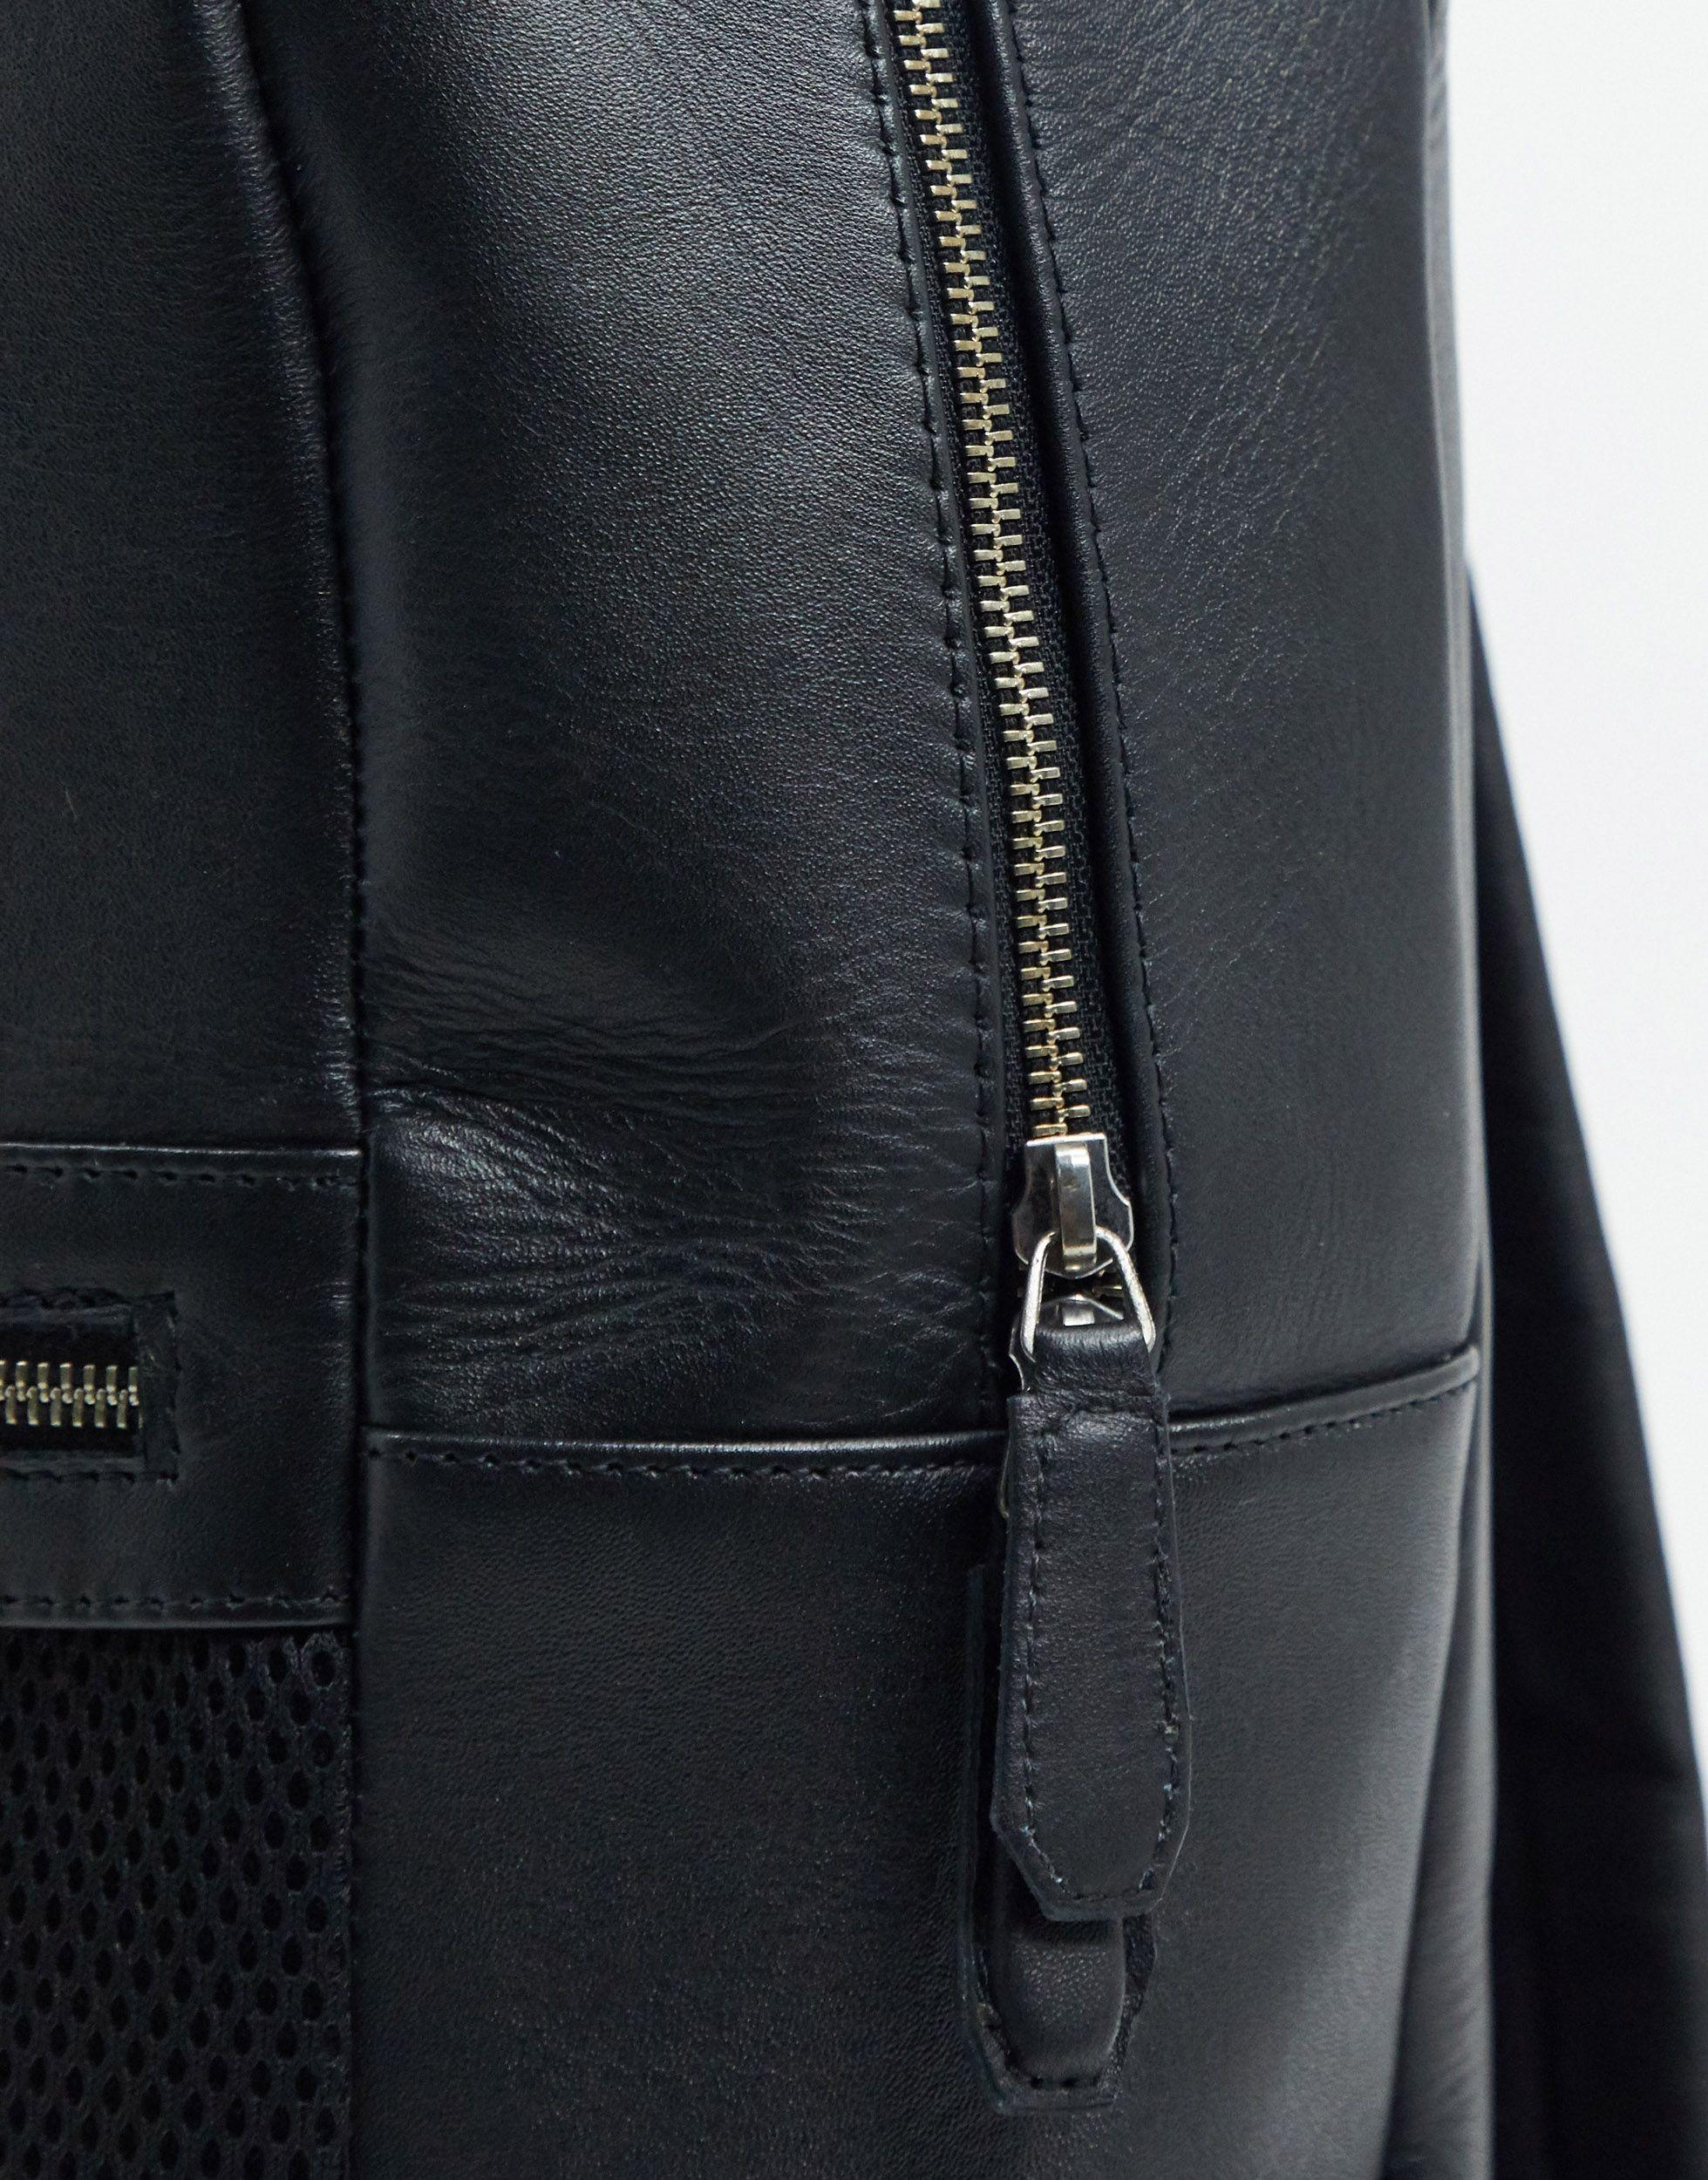 Bolongaro Trevor Leather Backpack With Mesh Pocket in Black for Men - Lyst